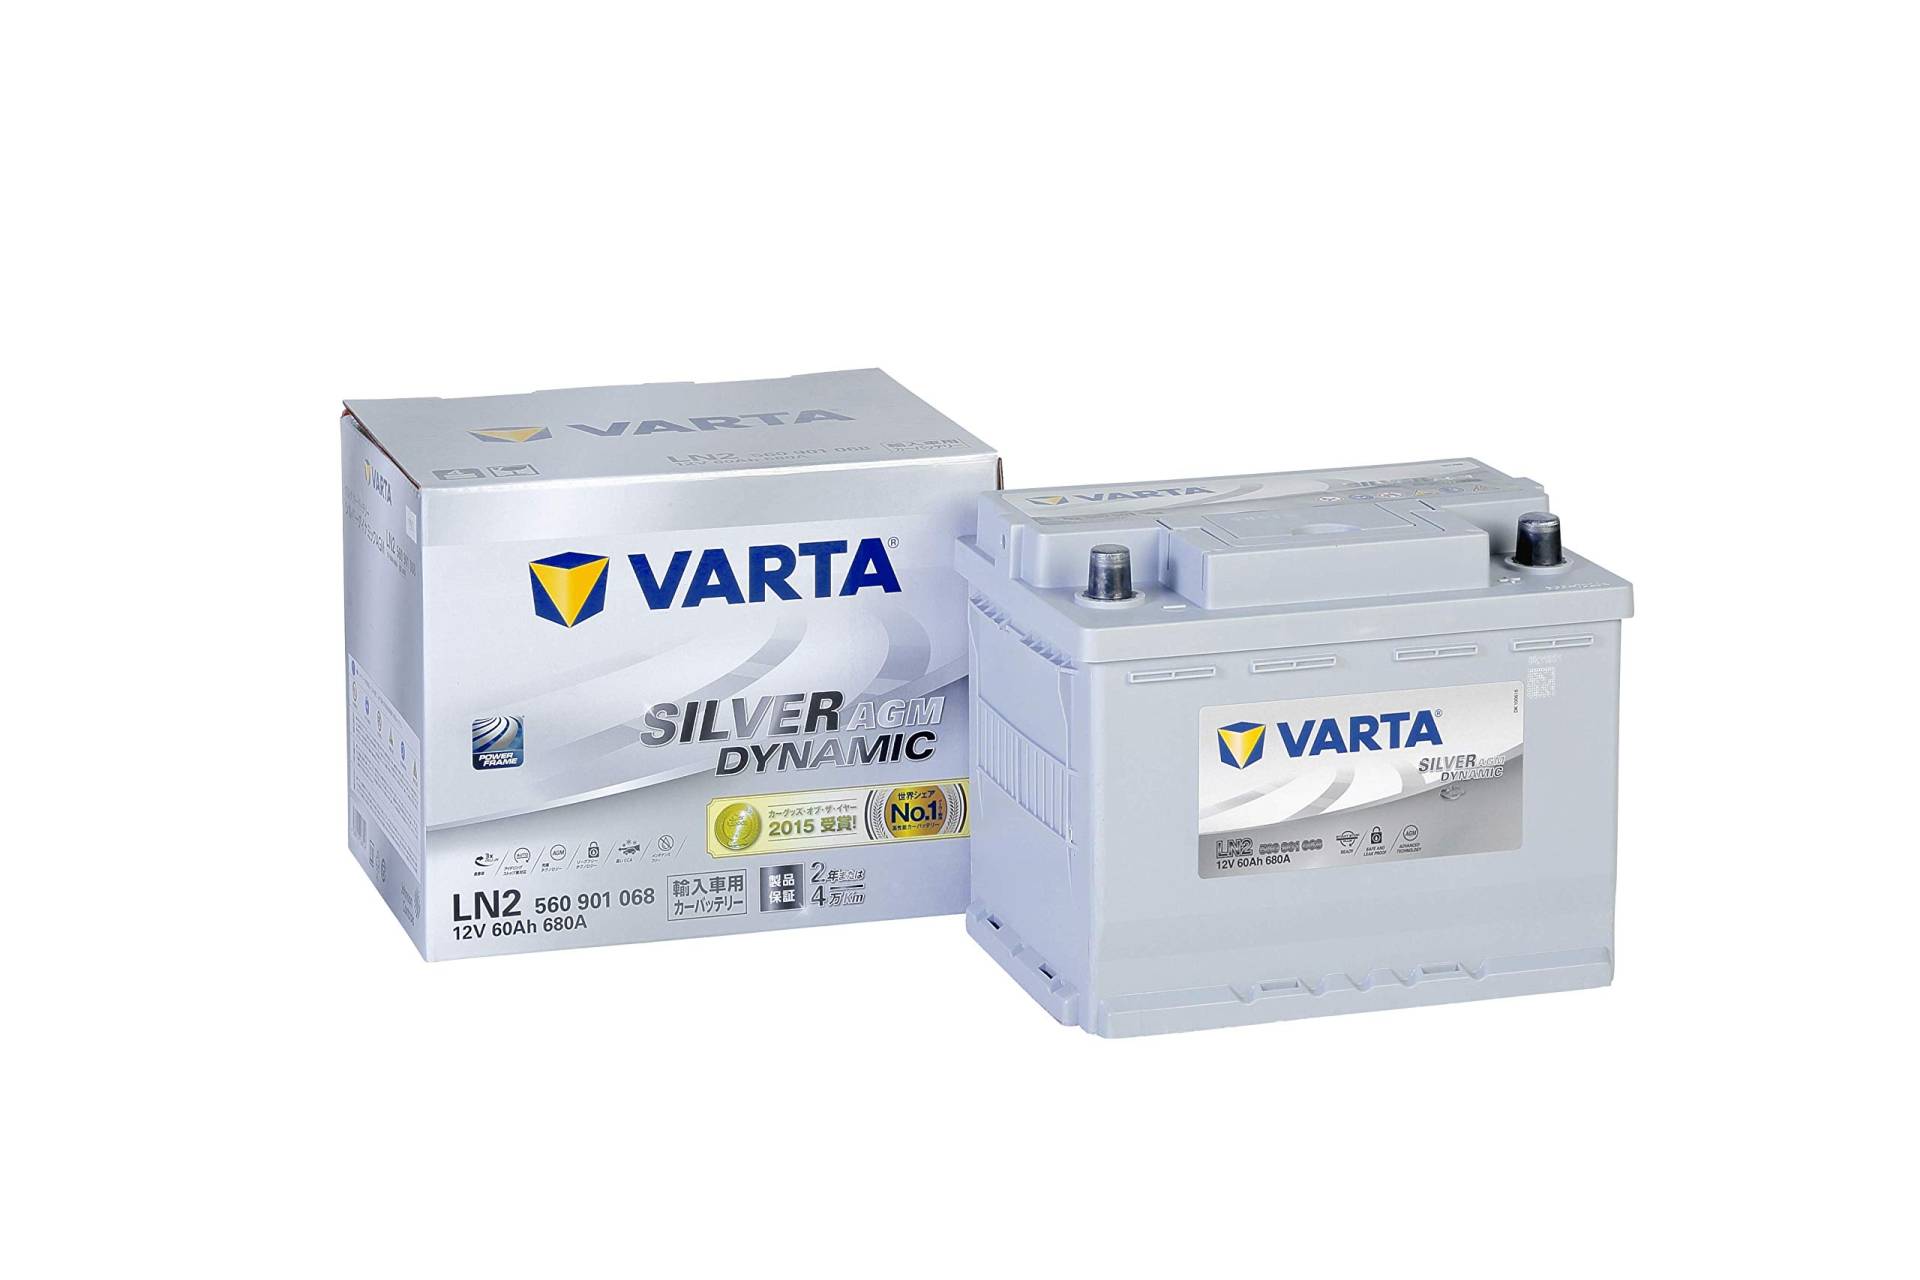 Varta 560 901 068 PKW-Batterie mit Start-Stop Plus-System, D52, 12 V, 60 Ah, 680 A von Varta